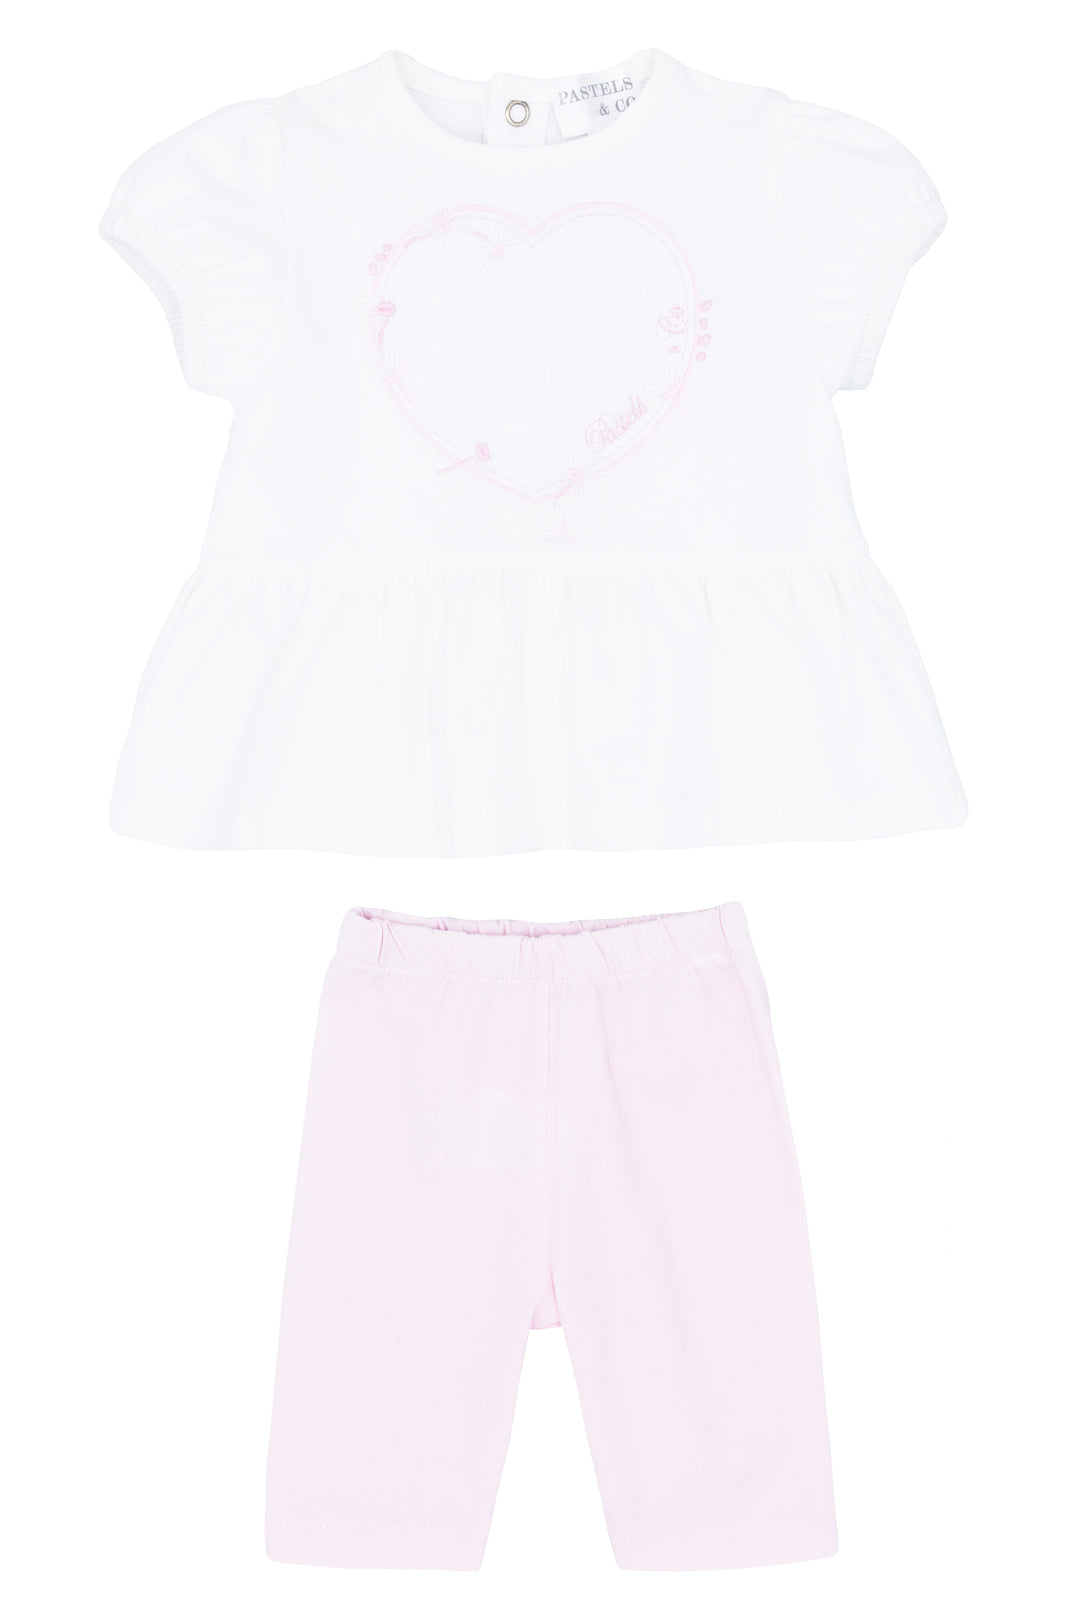 Pastels & Co "Colette" White & Pink Blouse & Leggings | Millie and John